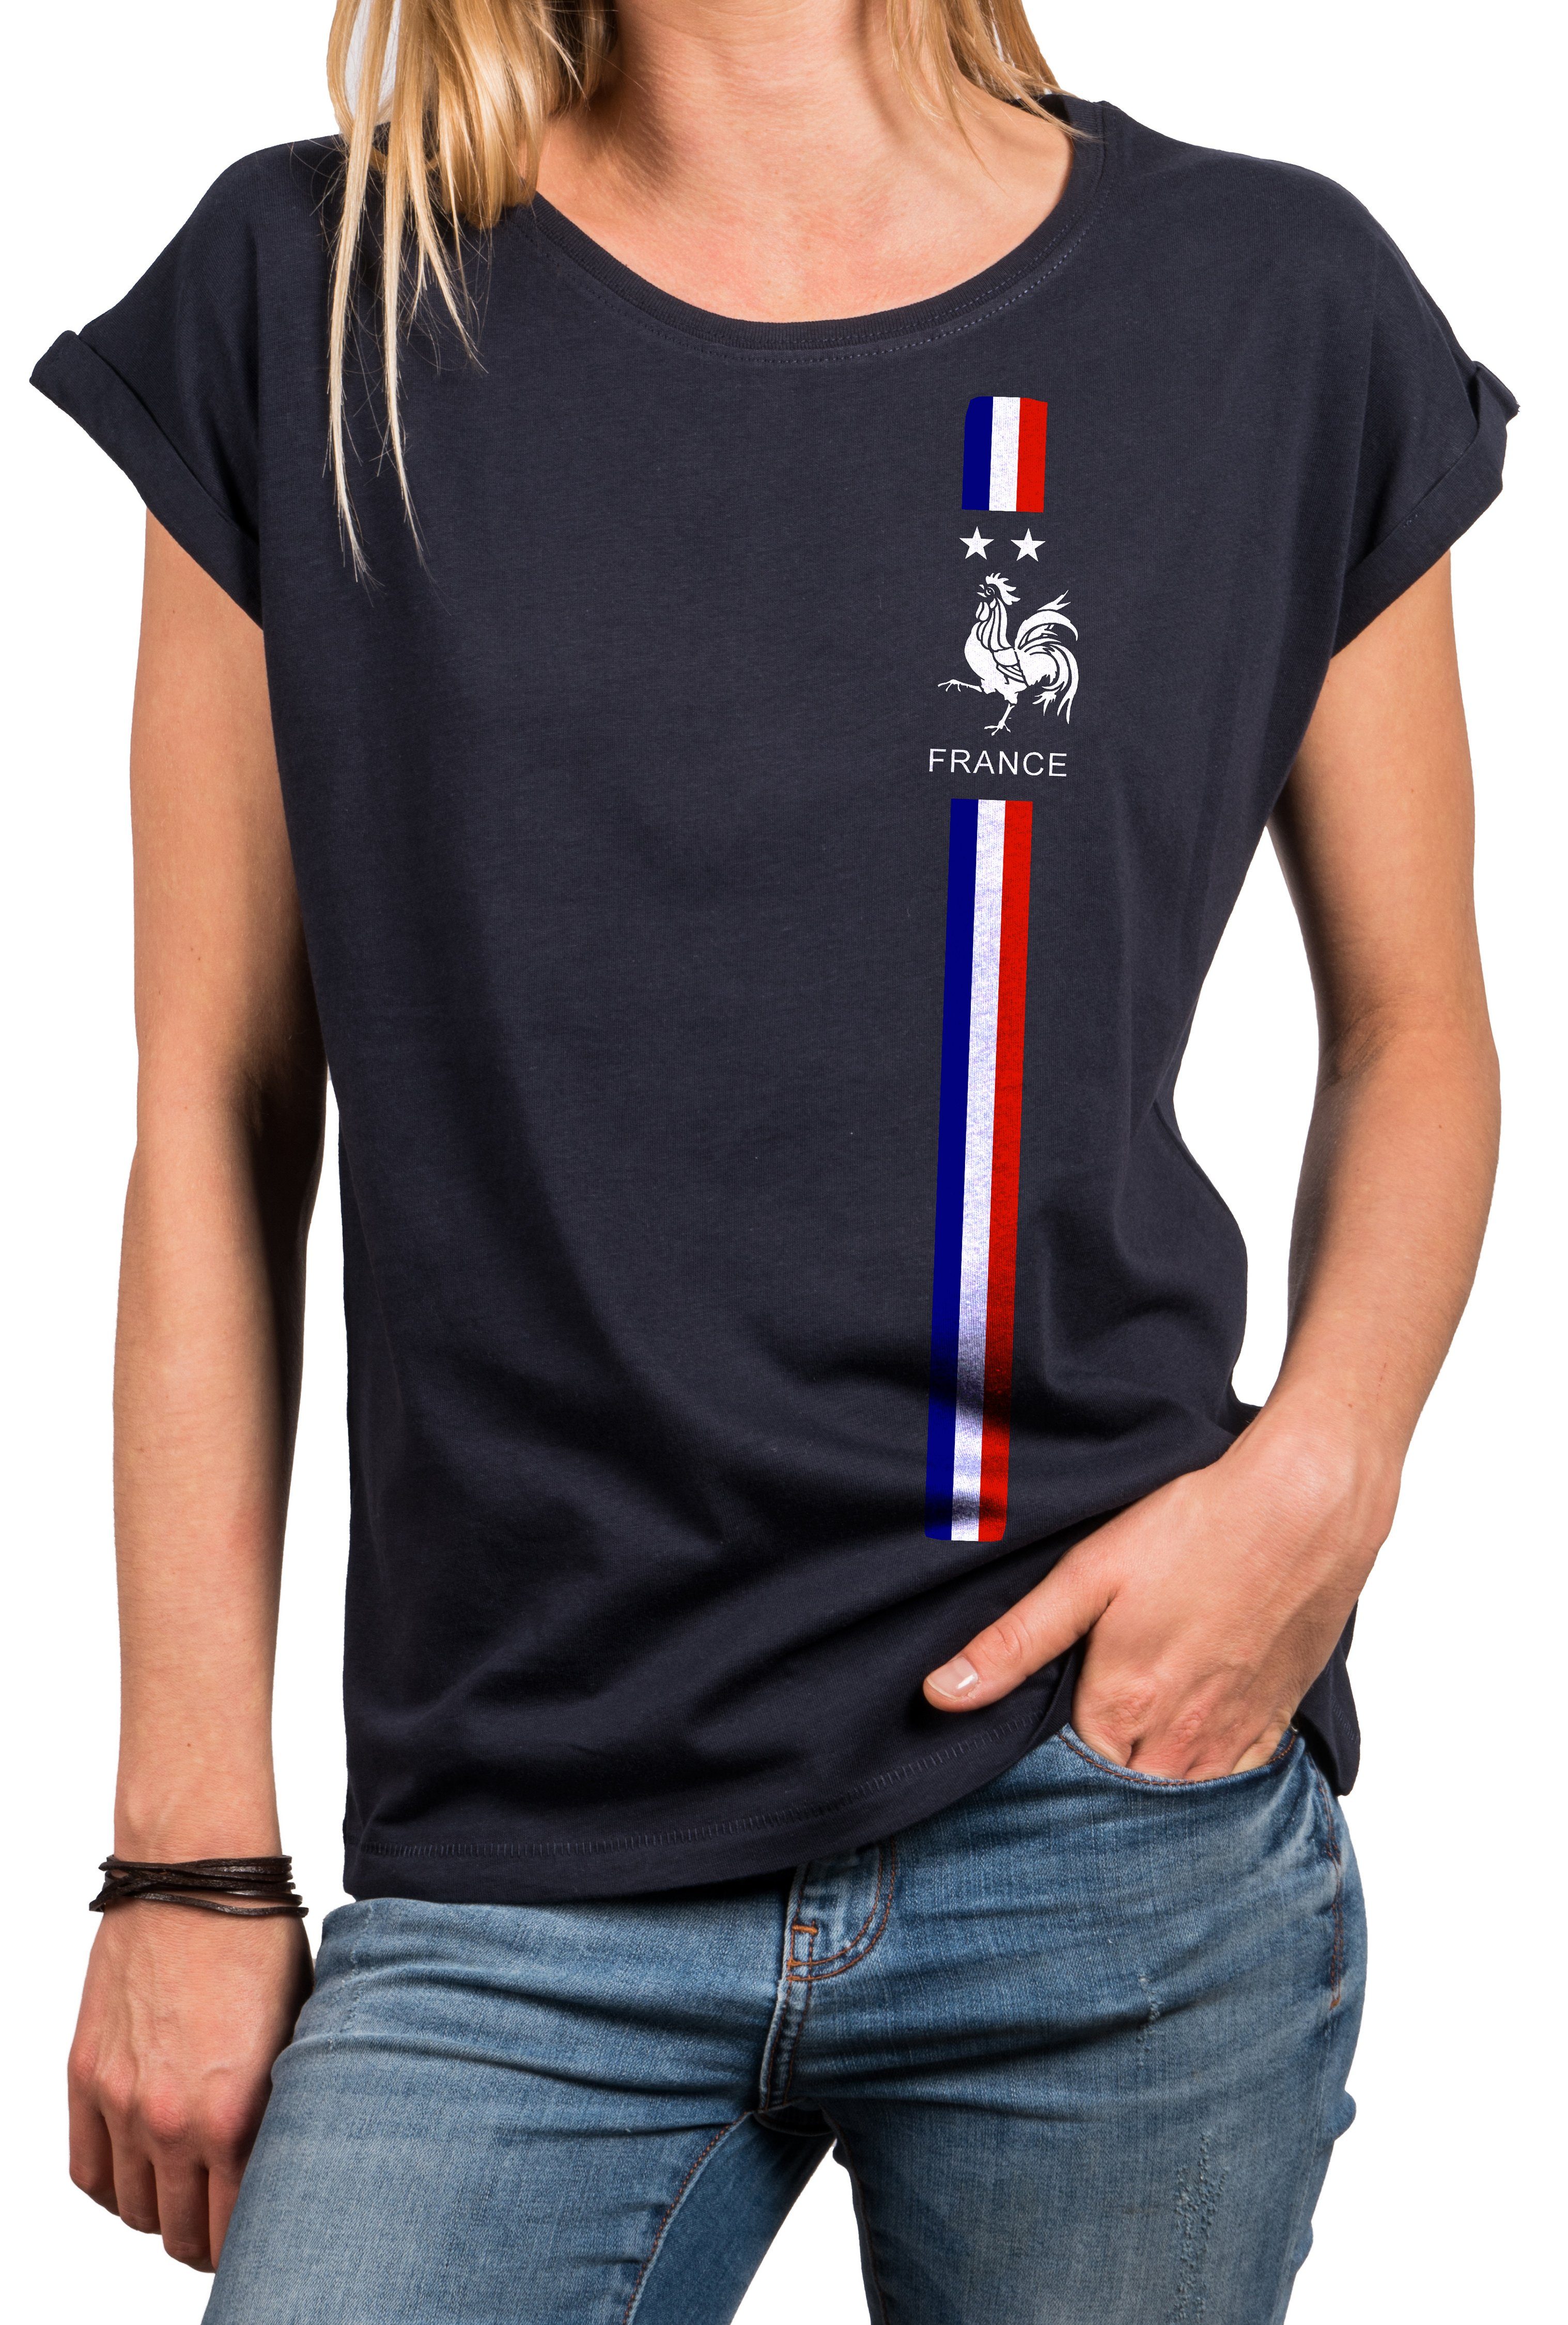 MAKAYA Fahne Tunika, Kurzarmshirt Flagge Blau Baumwolle Damen Print-Shirt Frankreich Größen Top Trikot große